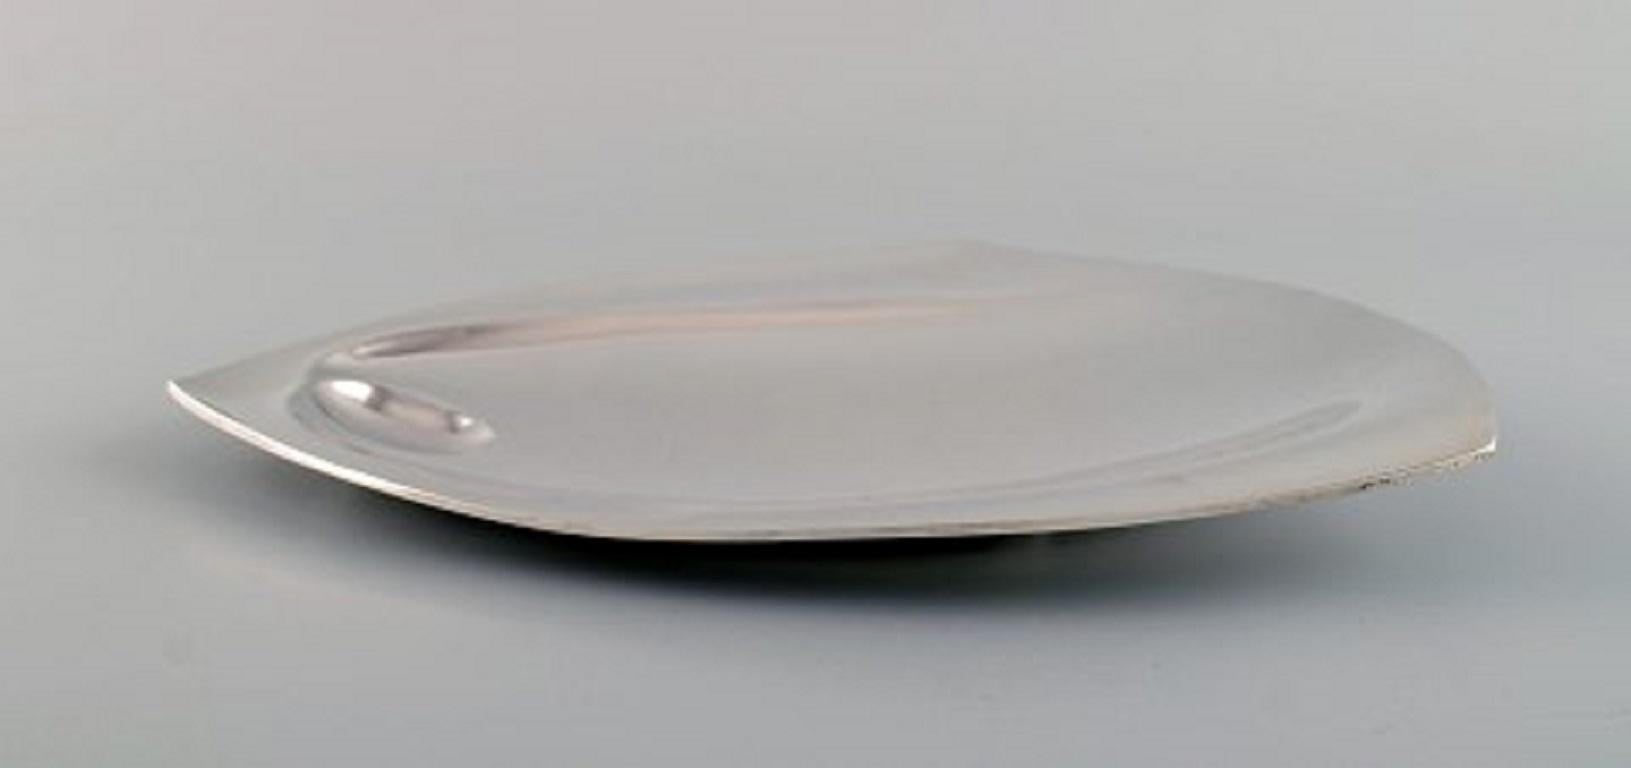 Tapio Wirkkala, Hopeakeskus, Tavastehus, Finland. Modernist bowl/dish in silver. Dated 1968.
Measures: 25.5 x 3 cm.
In excellent condition.
Stamped.